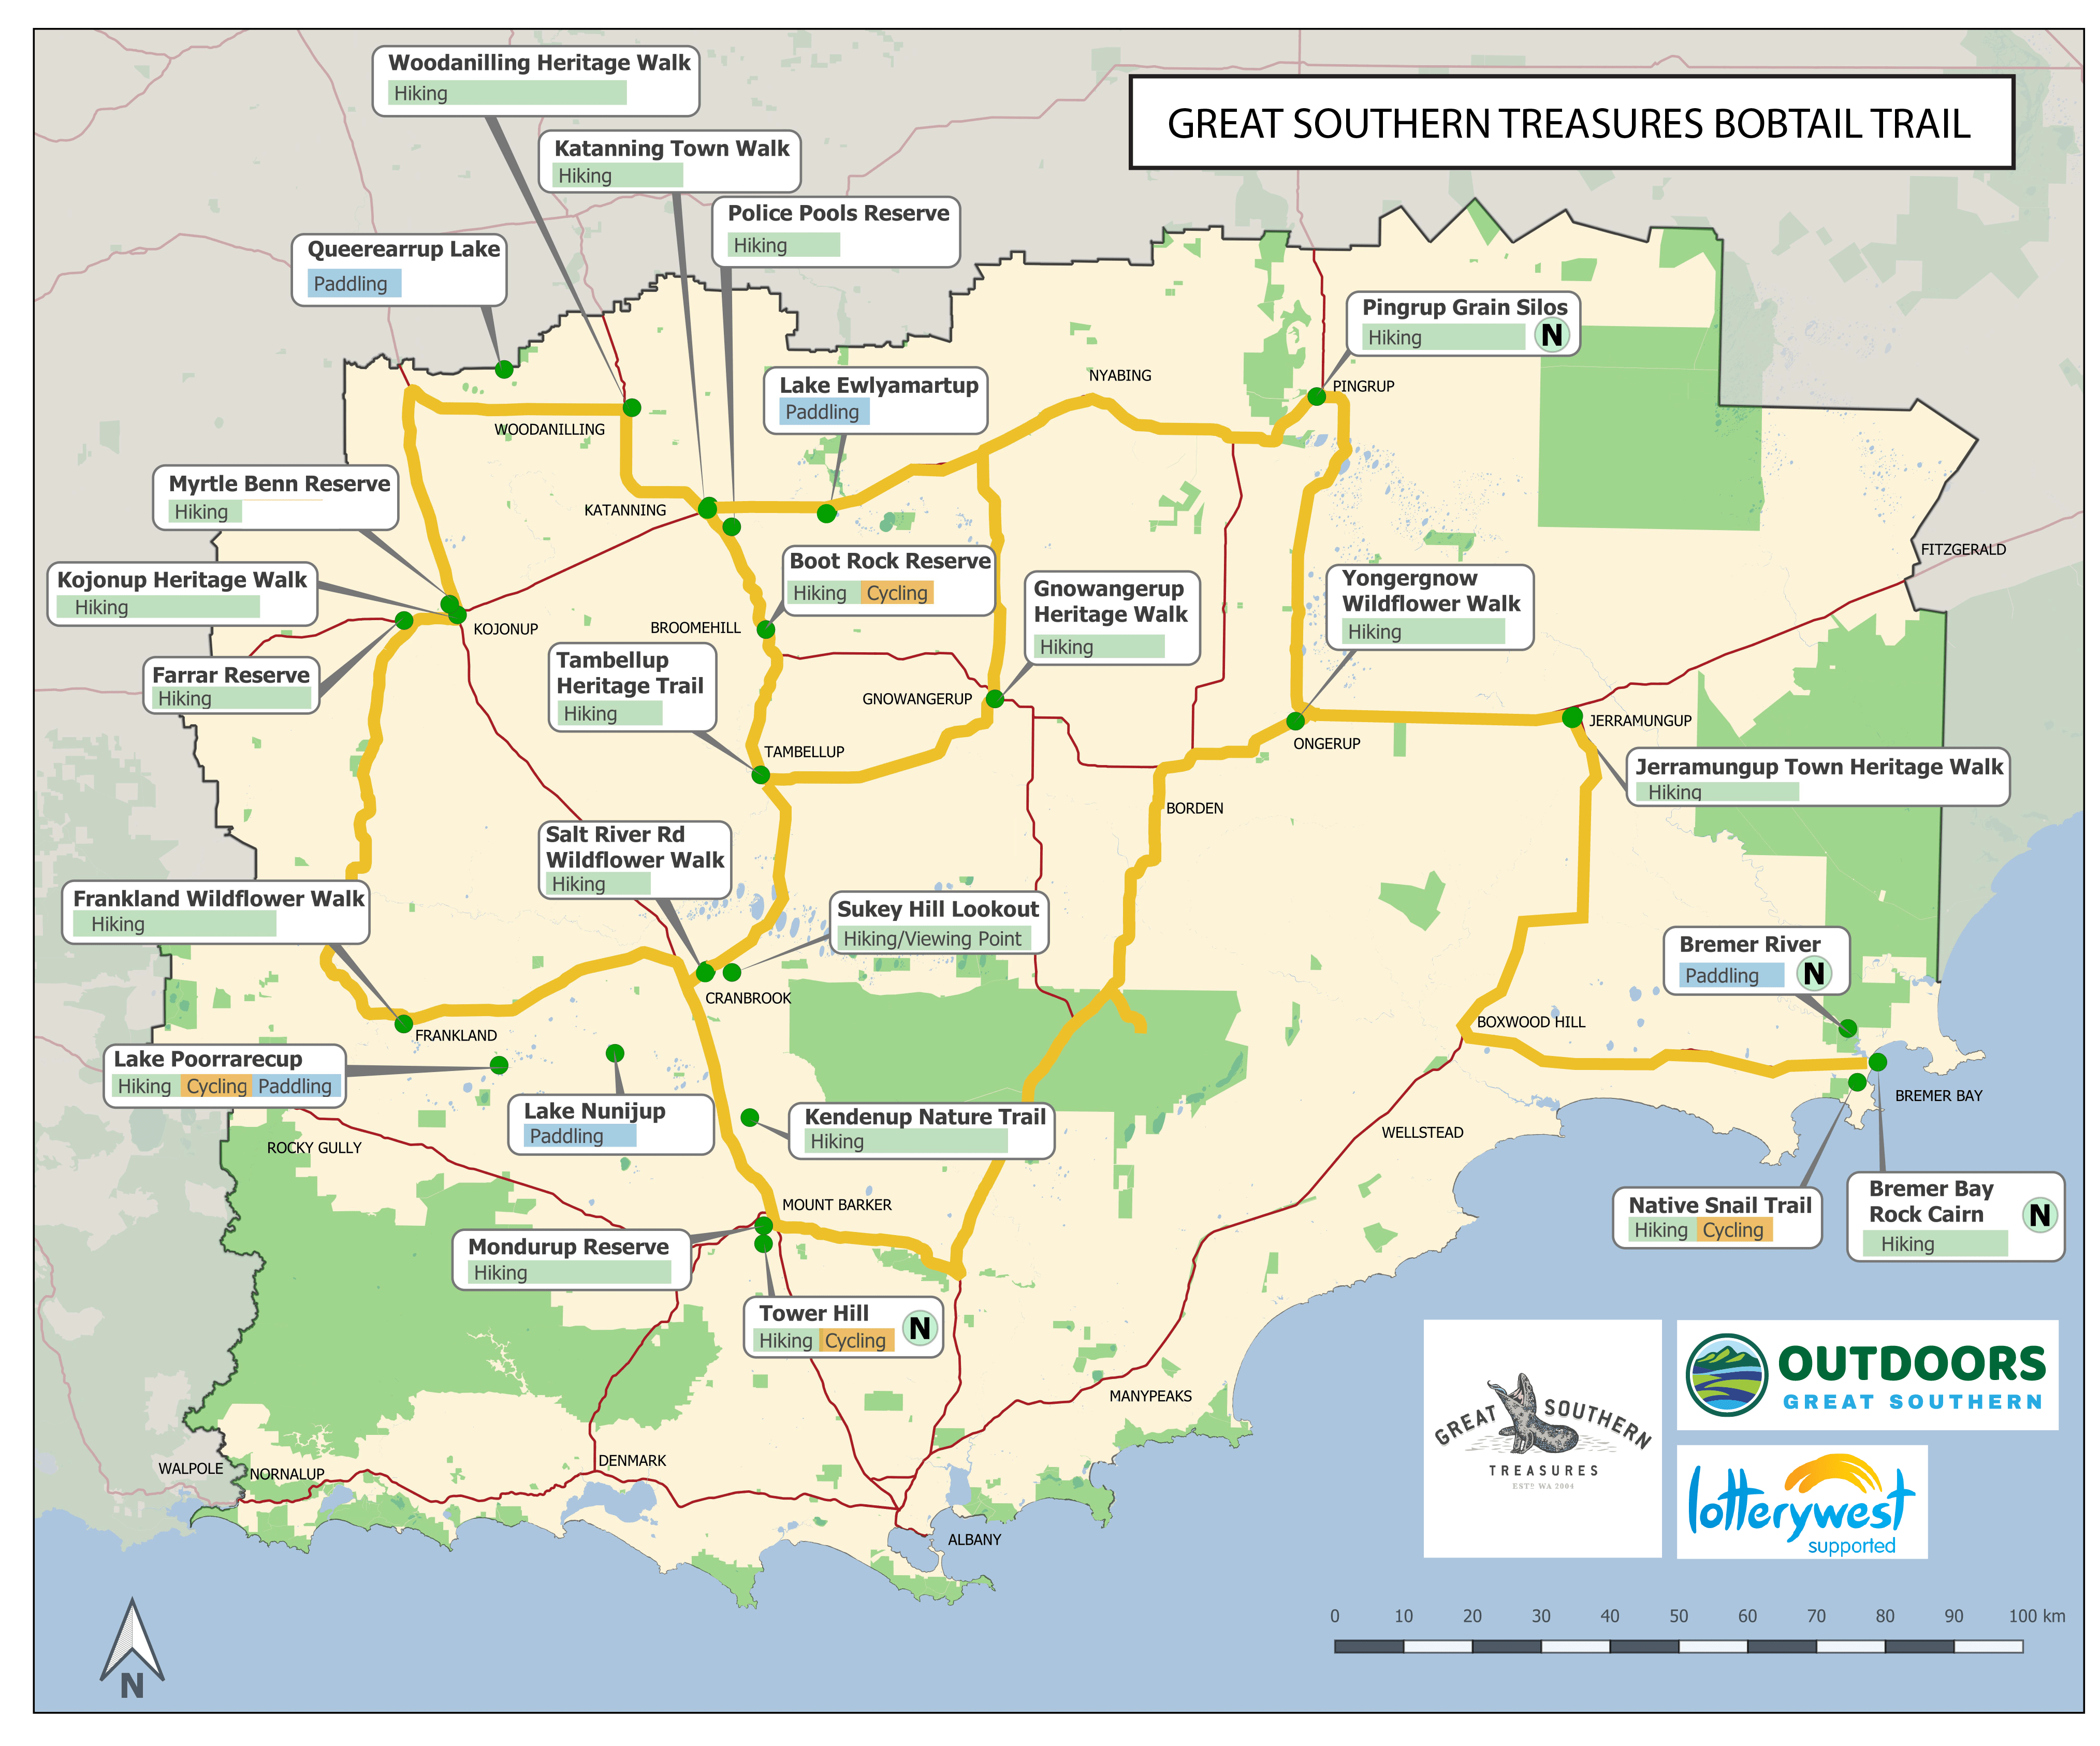 Great Southern Treasures Bobtail Trail map